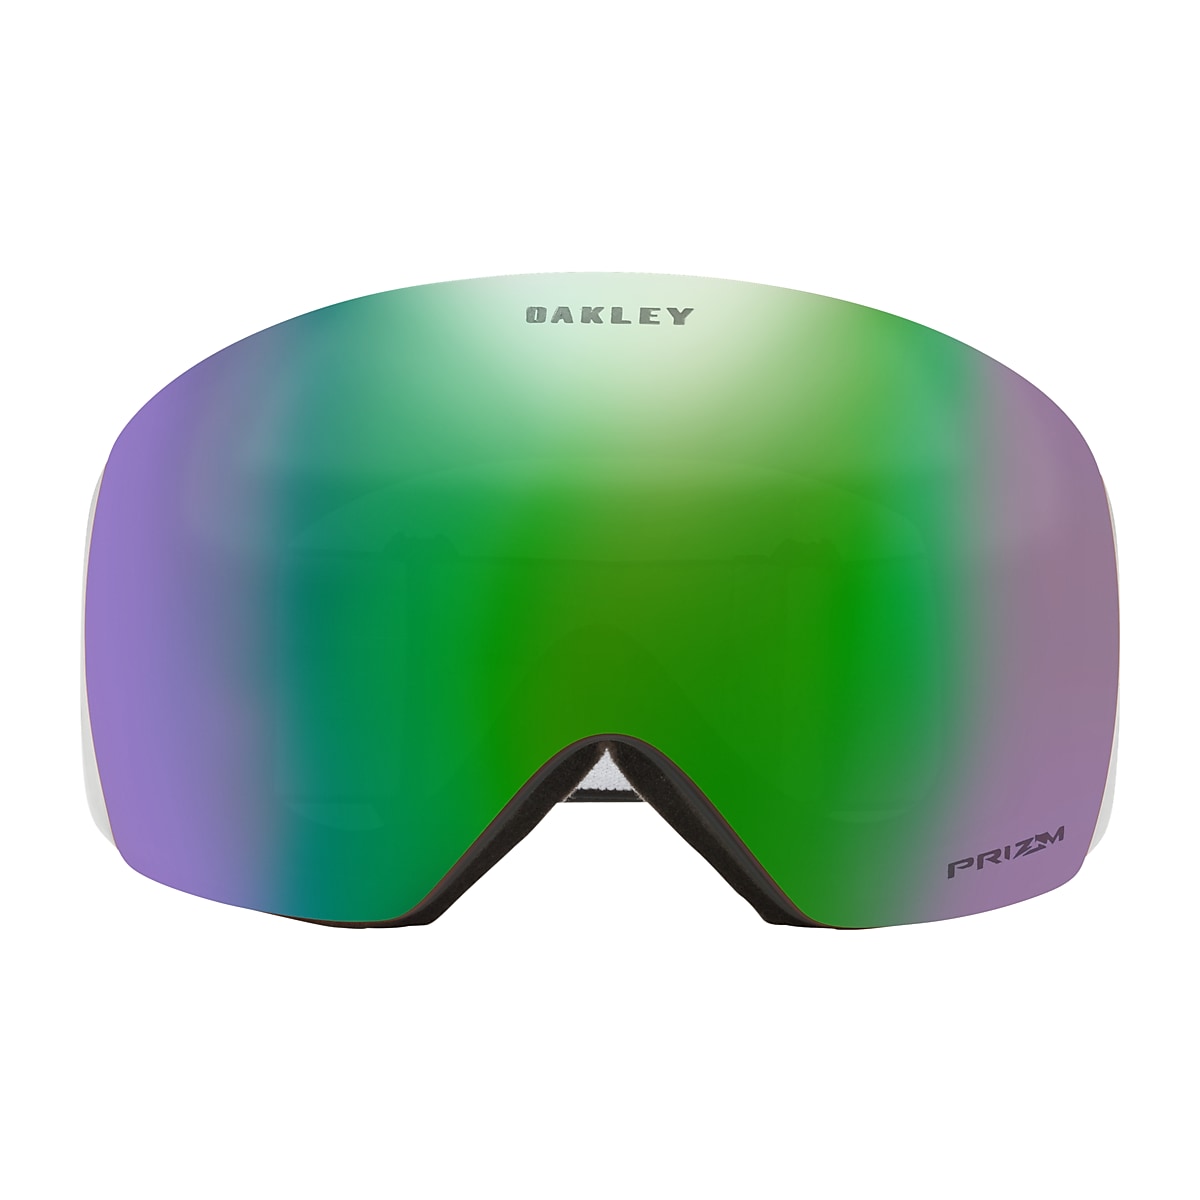 Oakley Flight Deck™ L Snow Goggles - Matte Black - Prizm Snow Jade Iridium  - OO7050-89 | Oakley GB Store